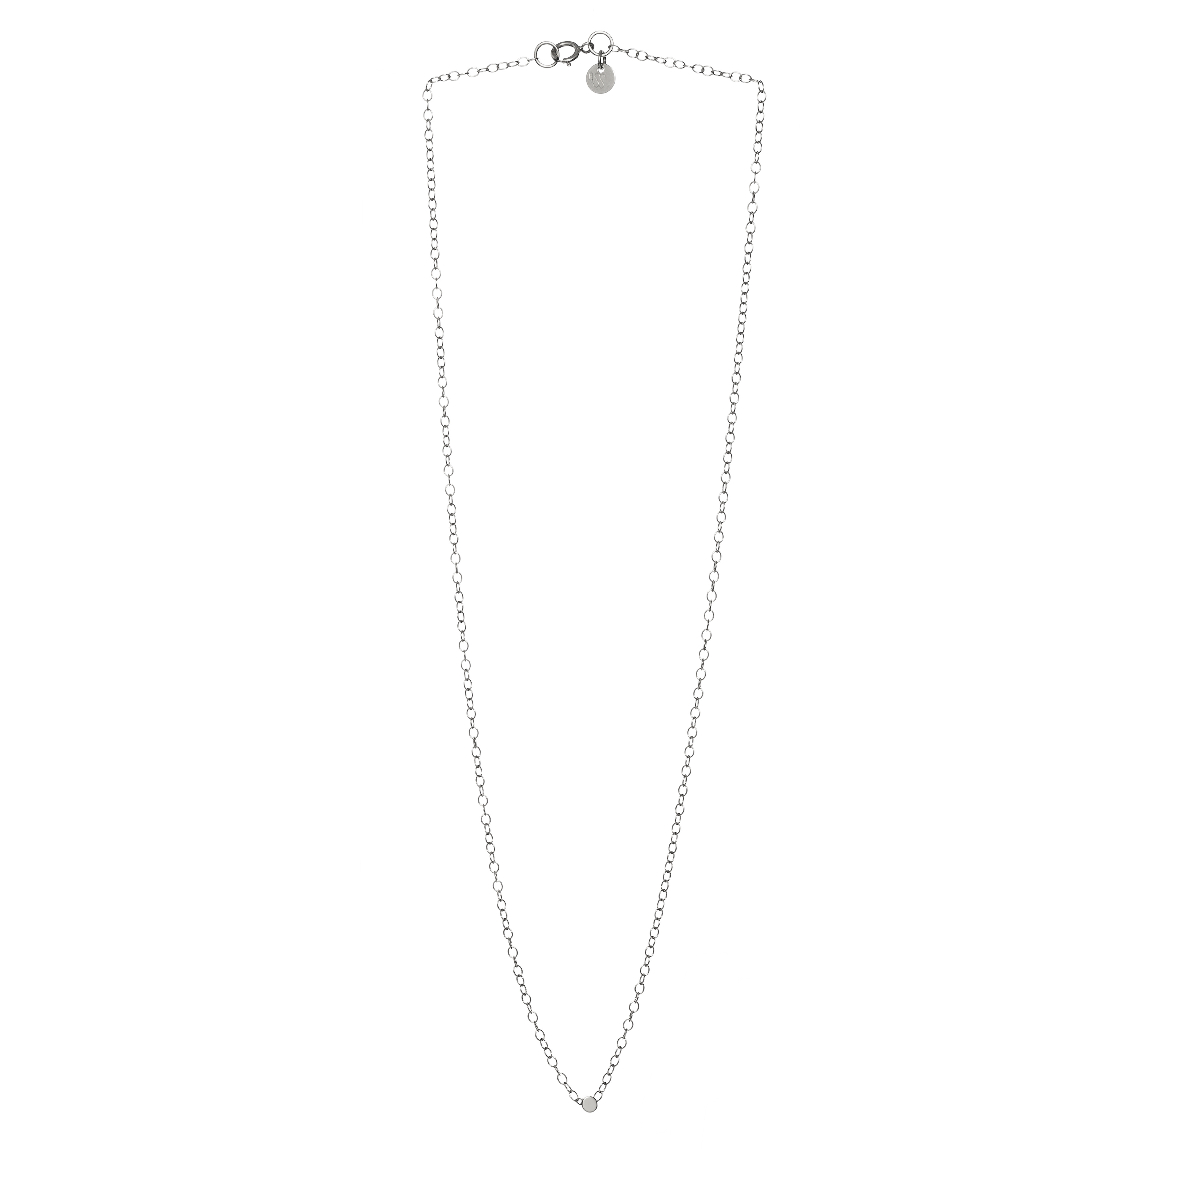 samojauskaite_jewellery_dot_necklace_silver_full